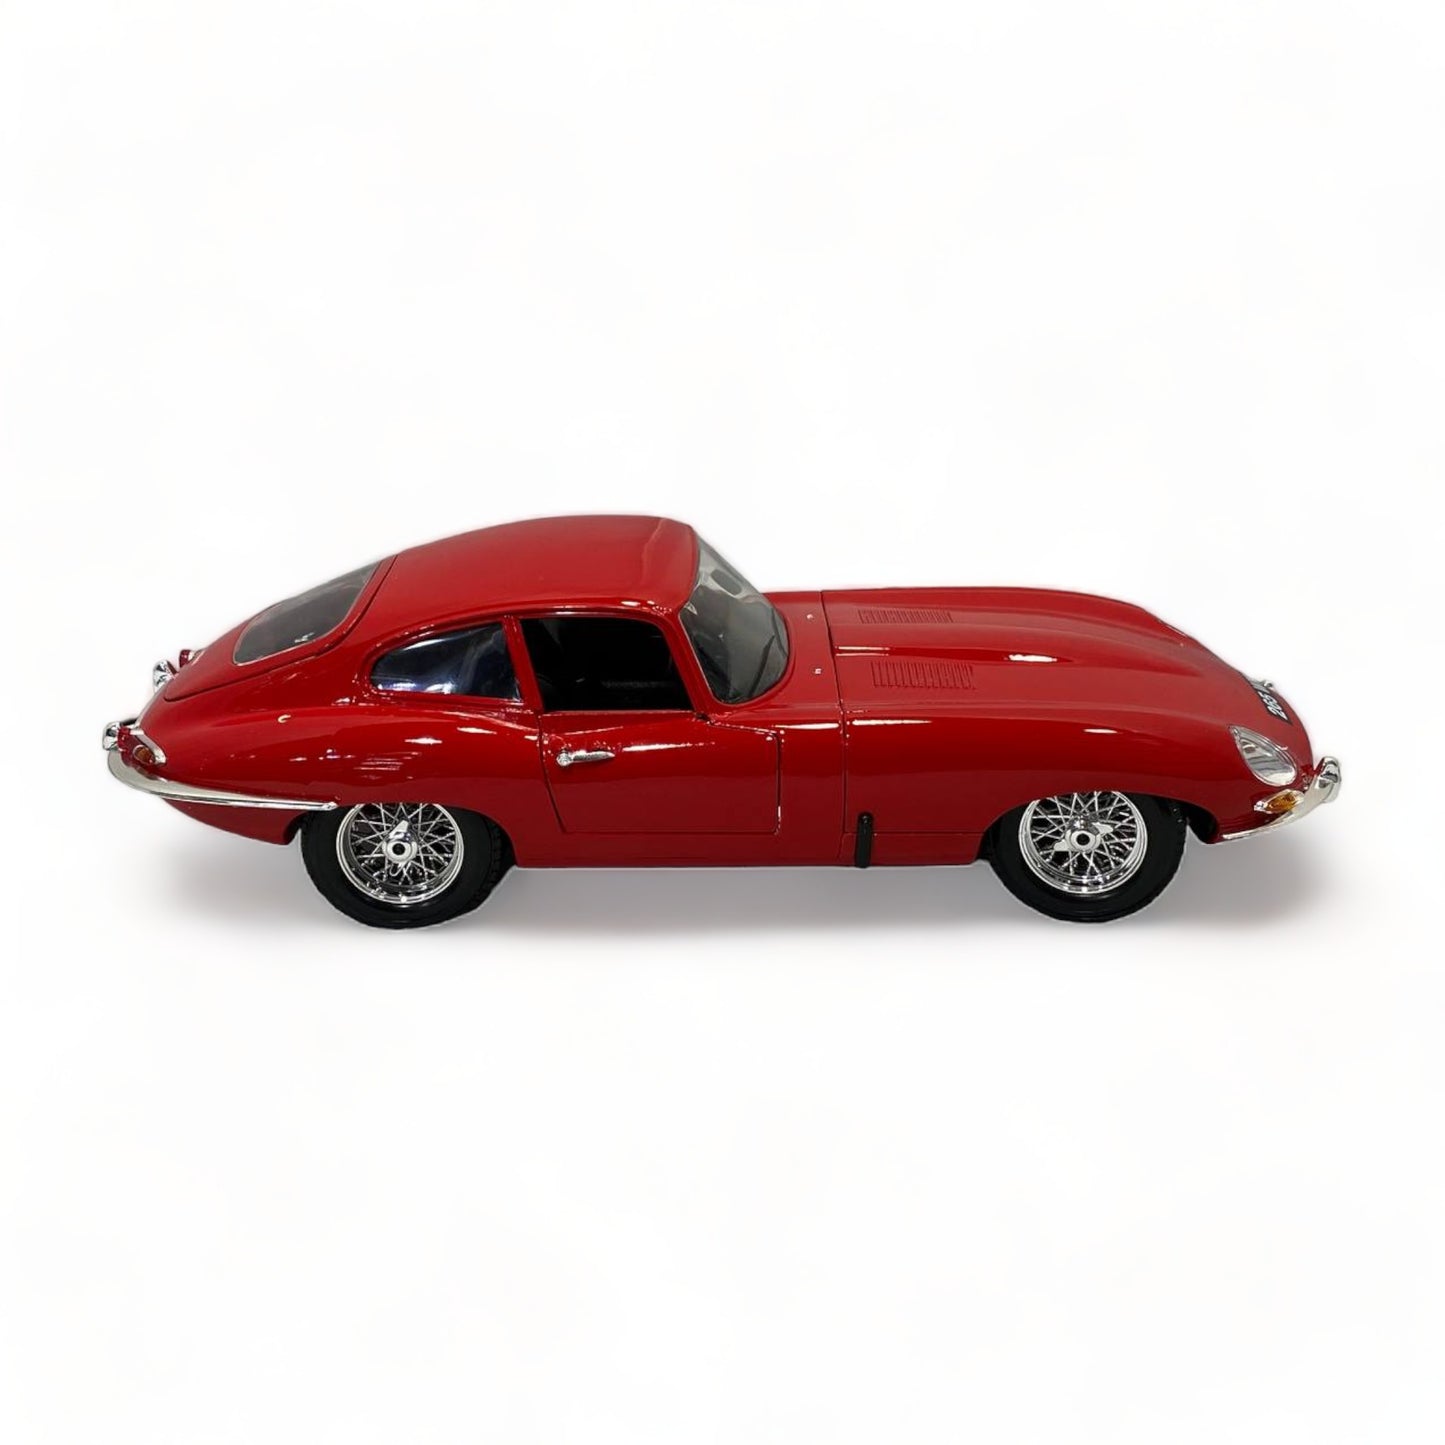 1/18 Diecast Jaguar E TYPE COUPE  RED 1961 by Bburago Scale Model Car|Sold in Dturman.com Dubai UAE.